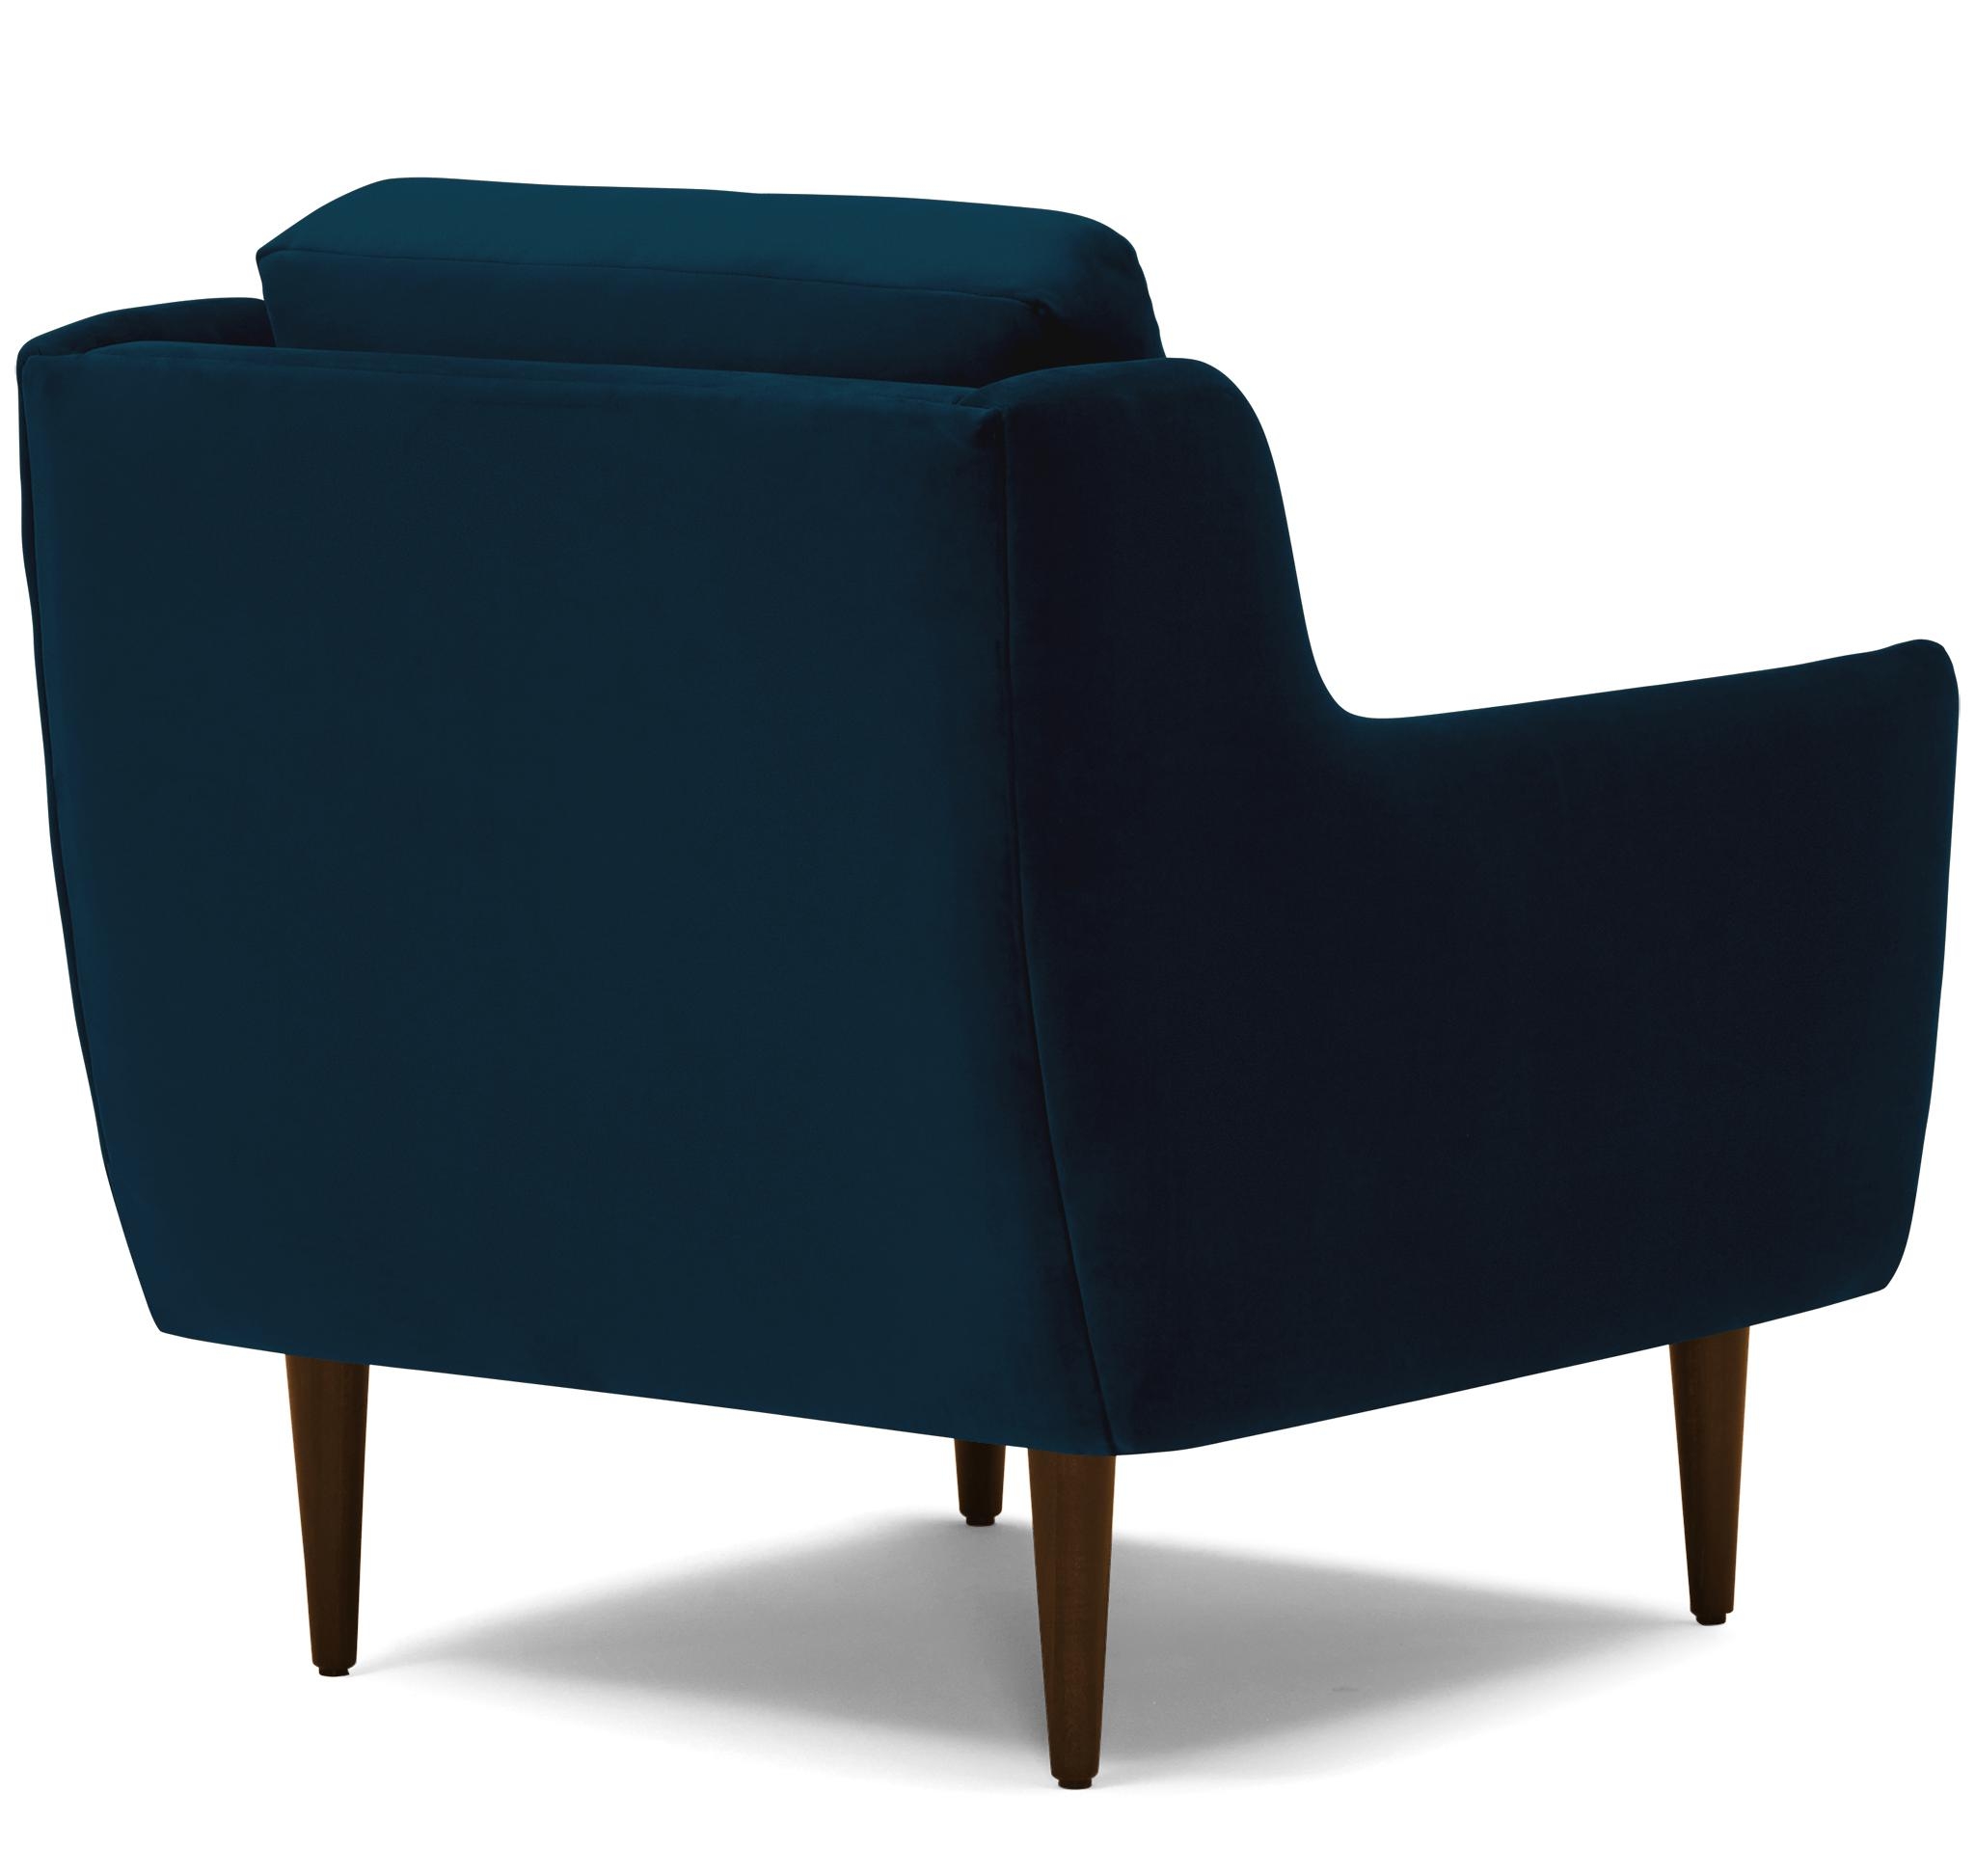 Blue Bell Mid Century Modern Chair - Key Largo Zenith Teal - Mocha - Image 3